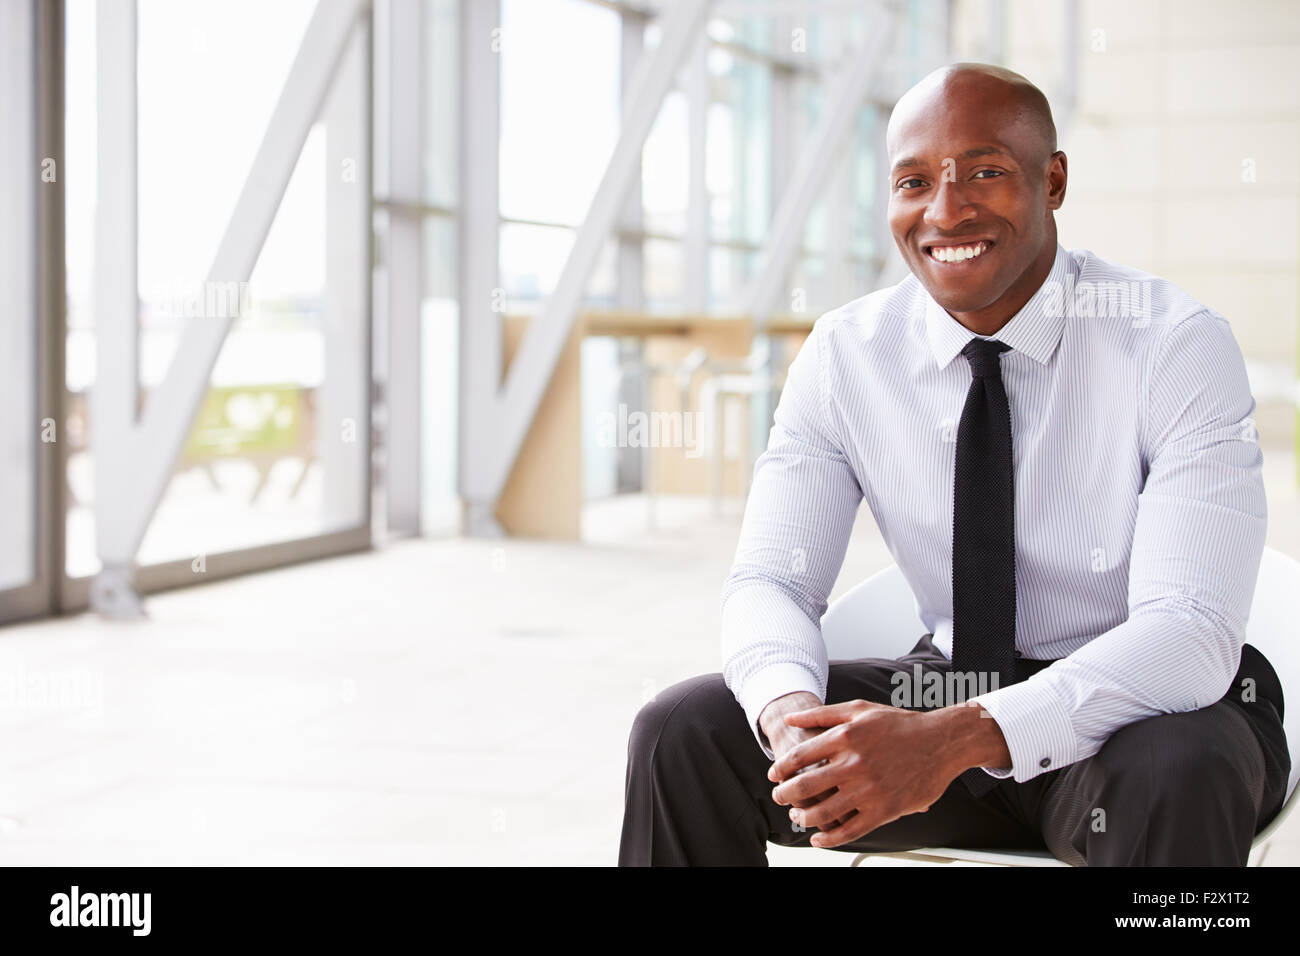 Smiling African American businessman, portrait horizontal Banque D'Images